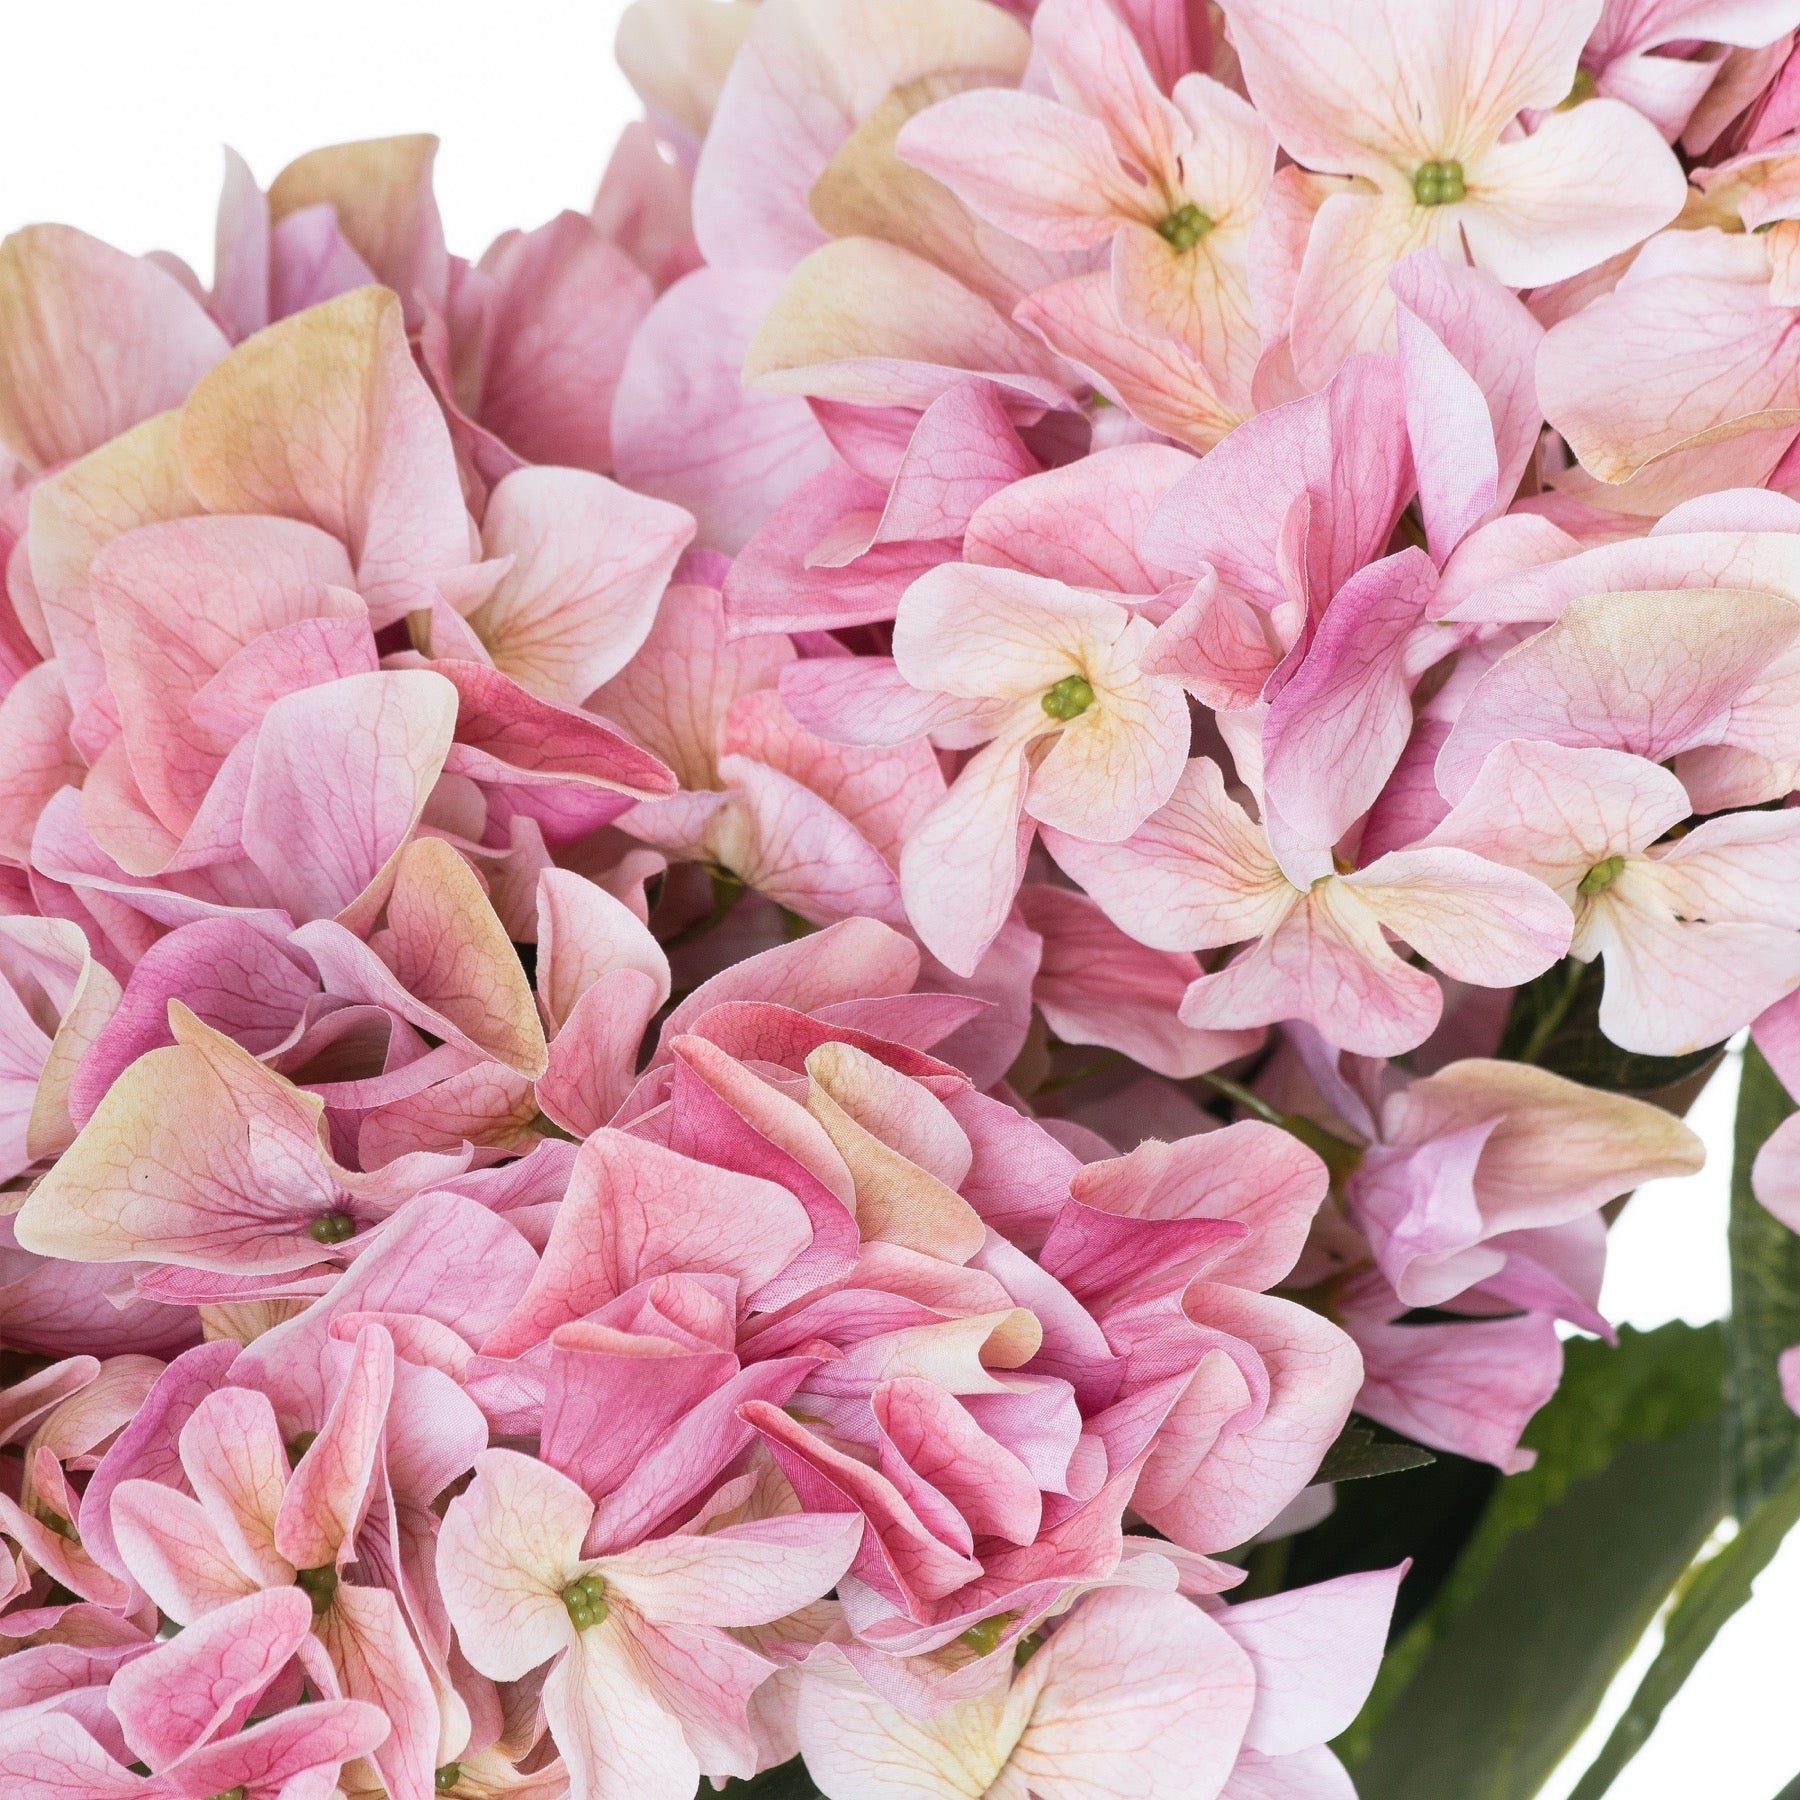 Shabby Pink Hydrangea Bouquet - The Tulip Tree Chiddingstone